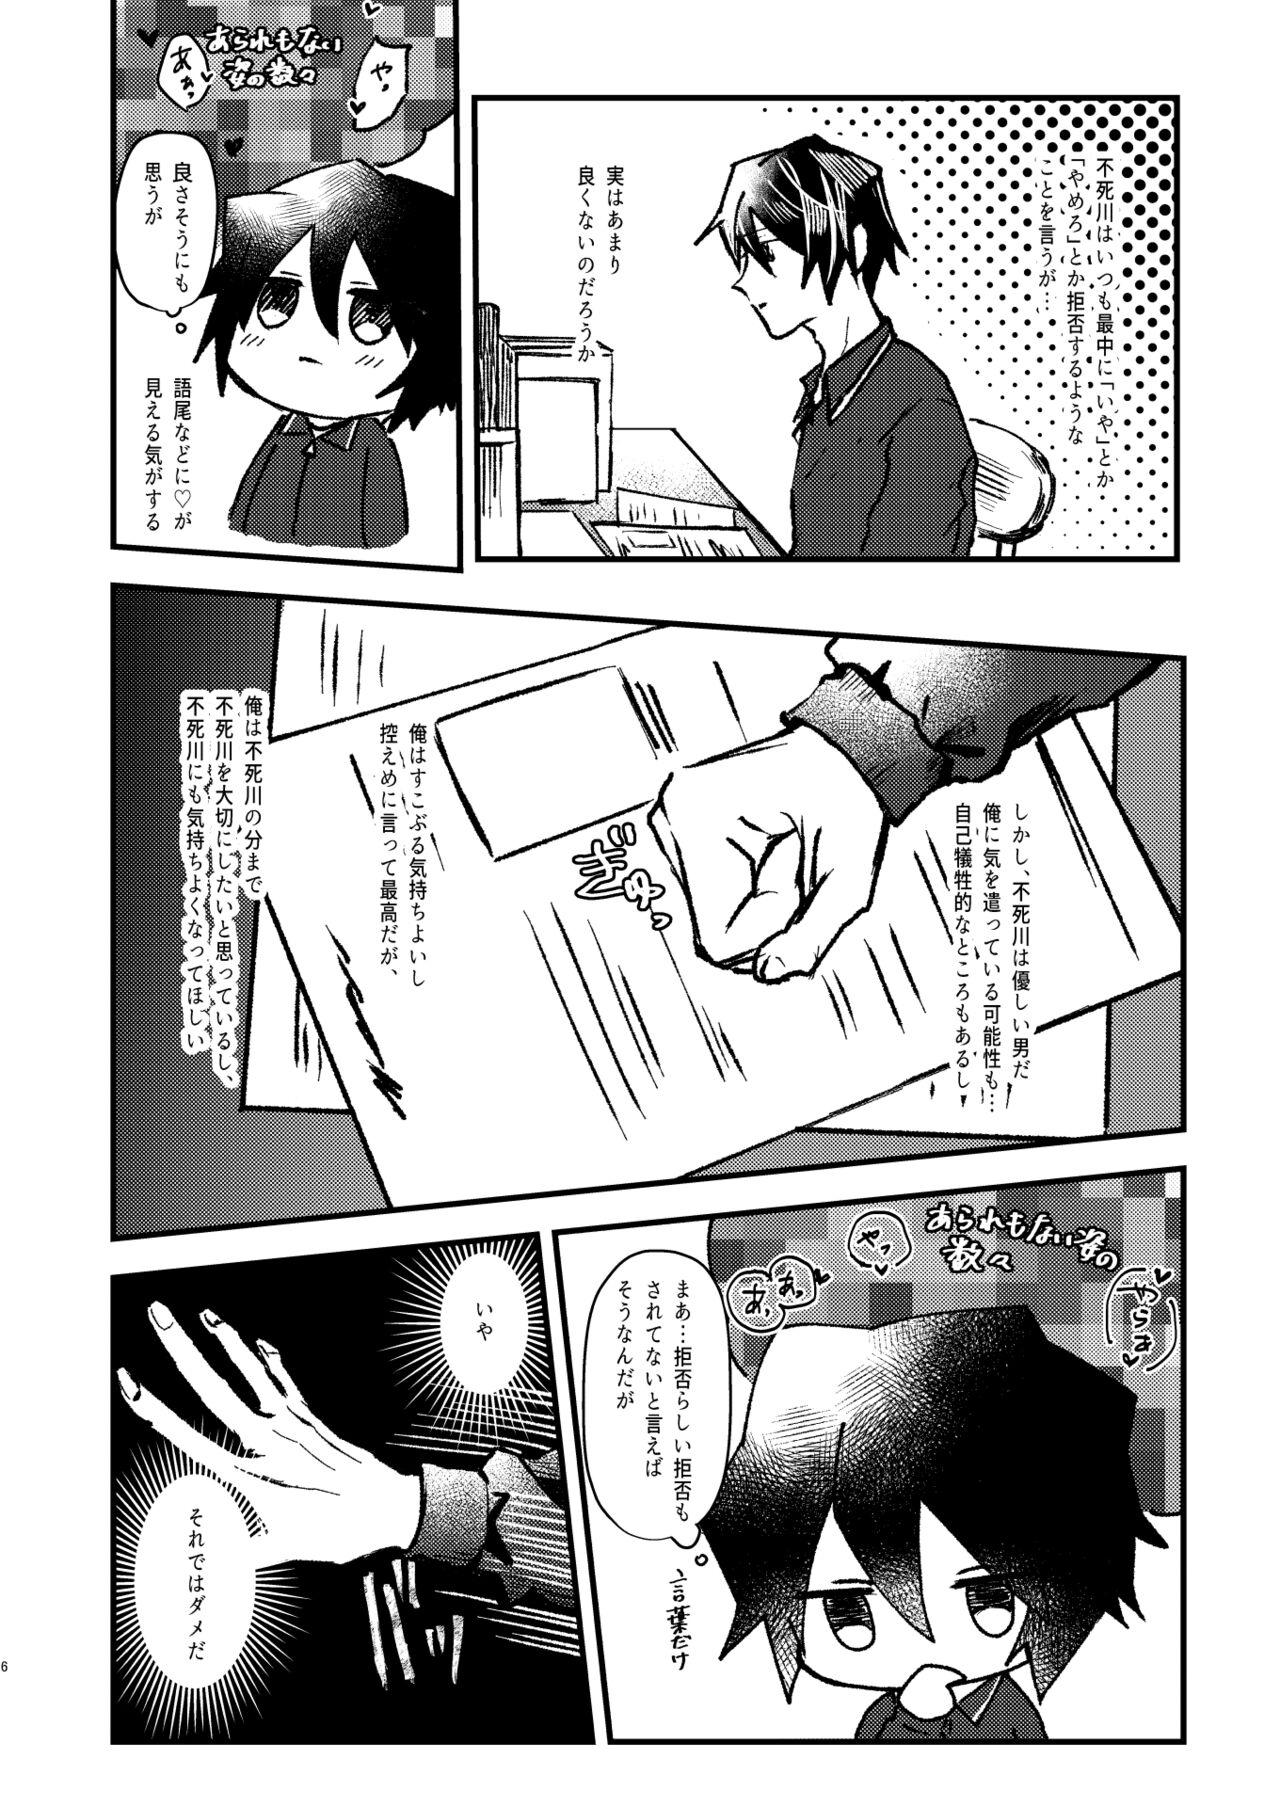 Class 嫌よ嫌よは好きのうち - Kimetsu no yaiba | demon slayer Anime - Page 5